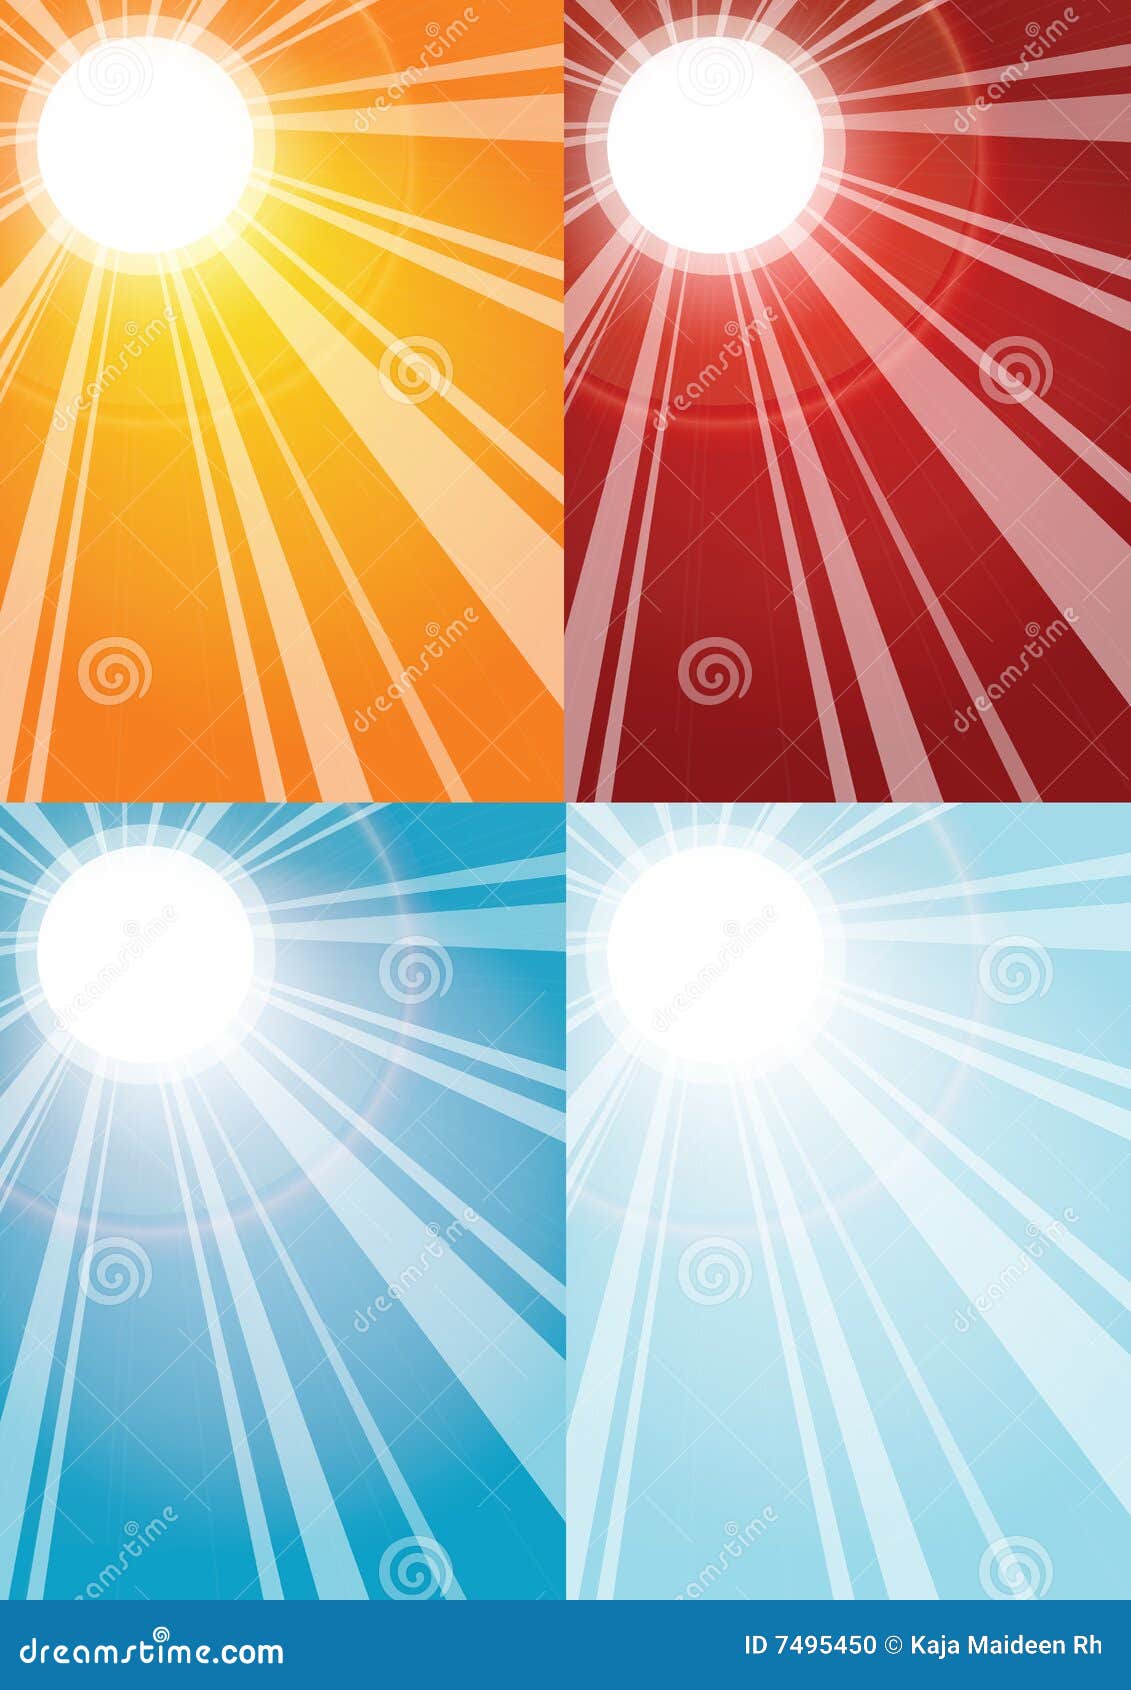 sun rays backgrounds